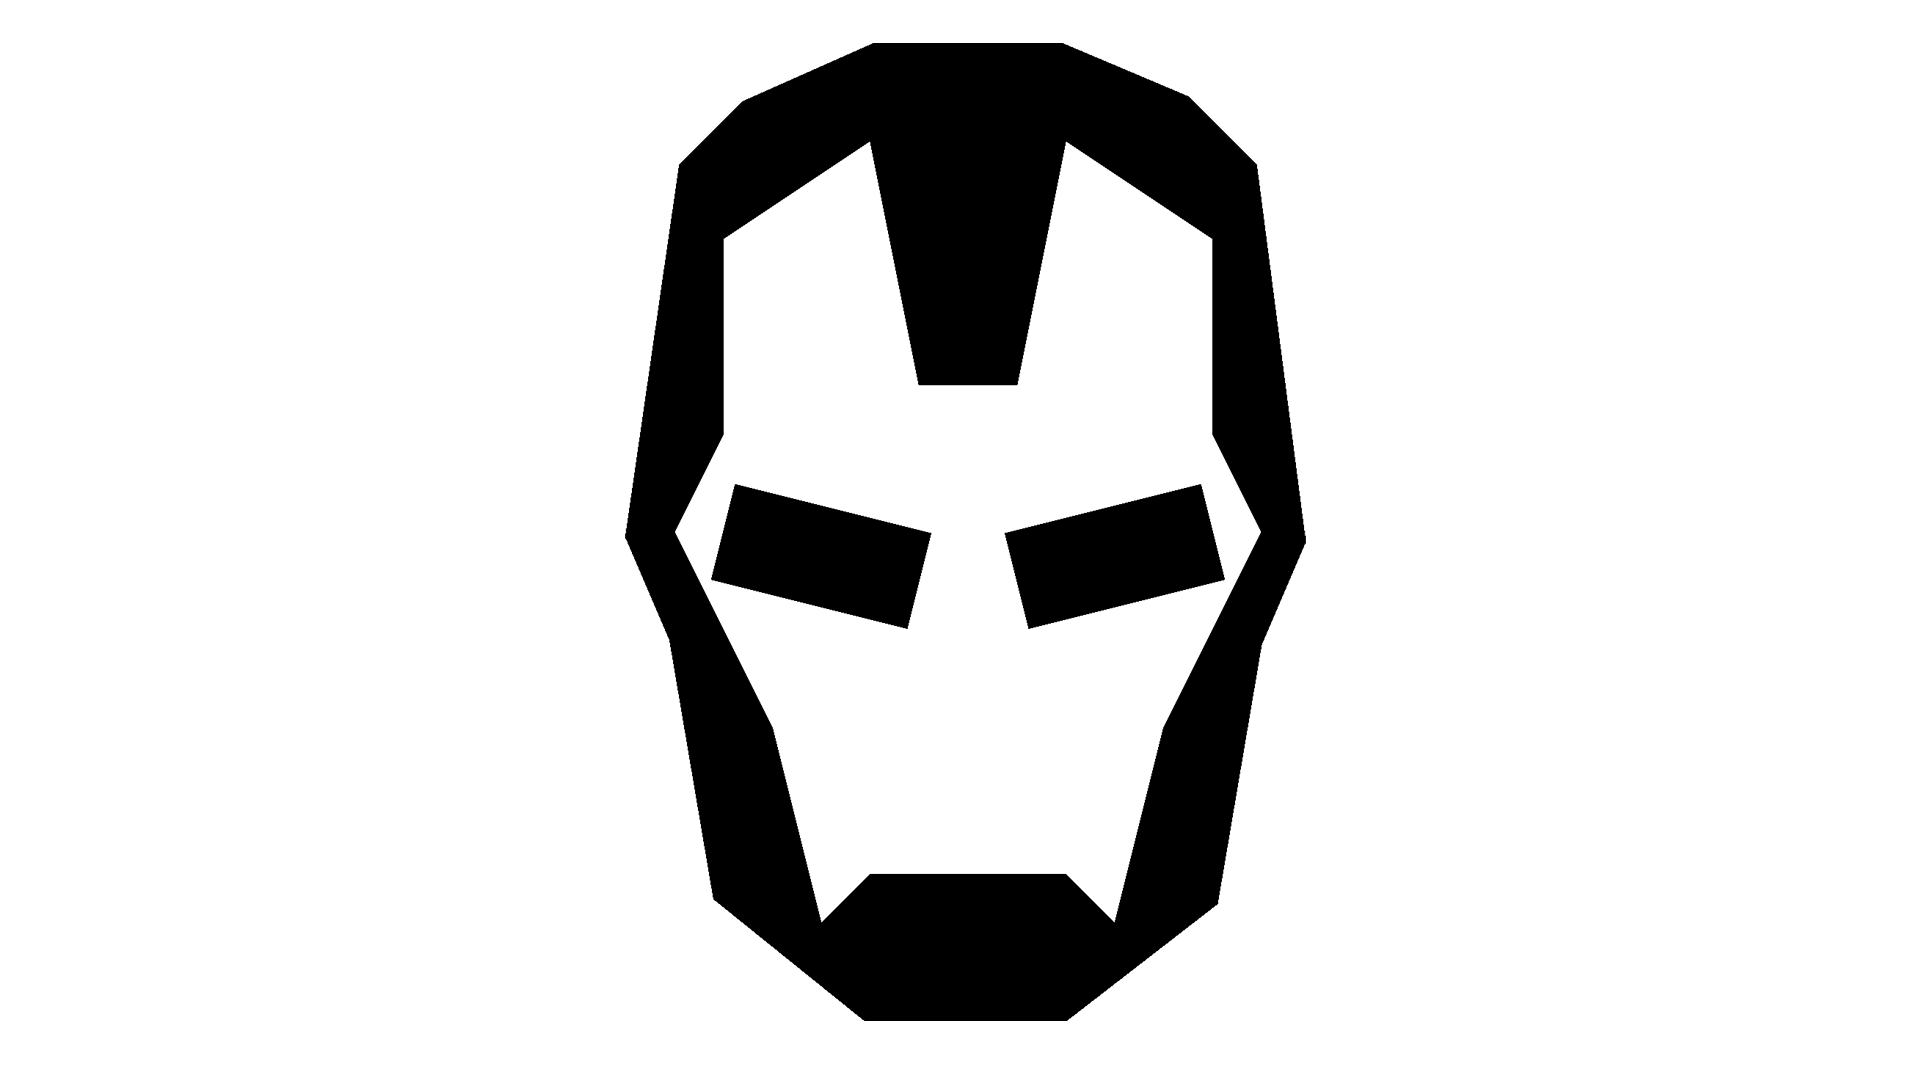 Iron Logo - Iron Man Logo, Iron Man Symbol, Meaning, History and Evolution